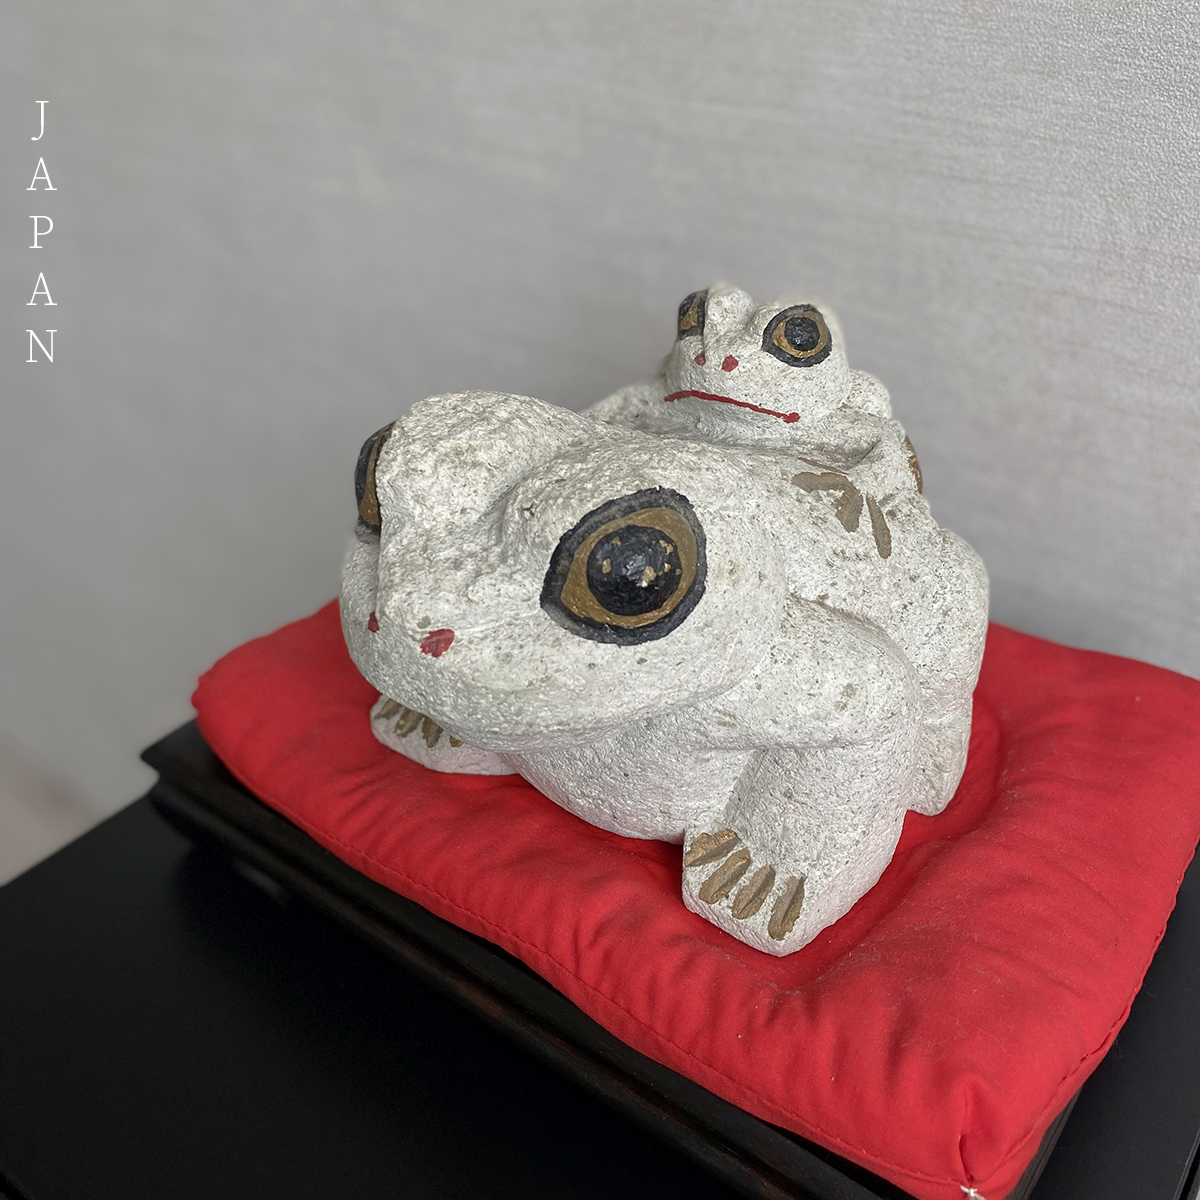 良品 親子蛙 石像 置台 座布団 付き 約5kg 石 彫刻 石蛙 蛙 カエル